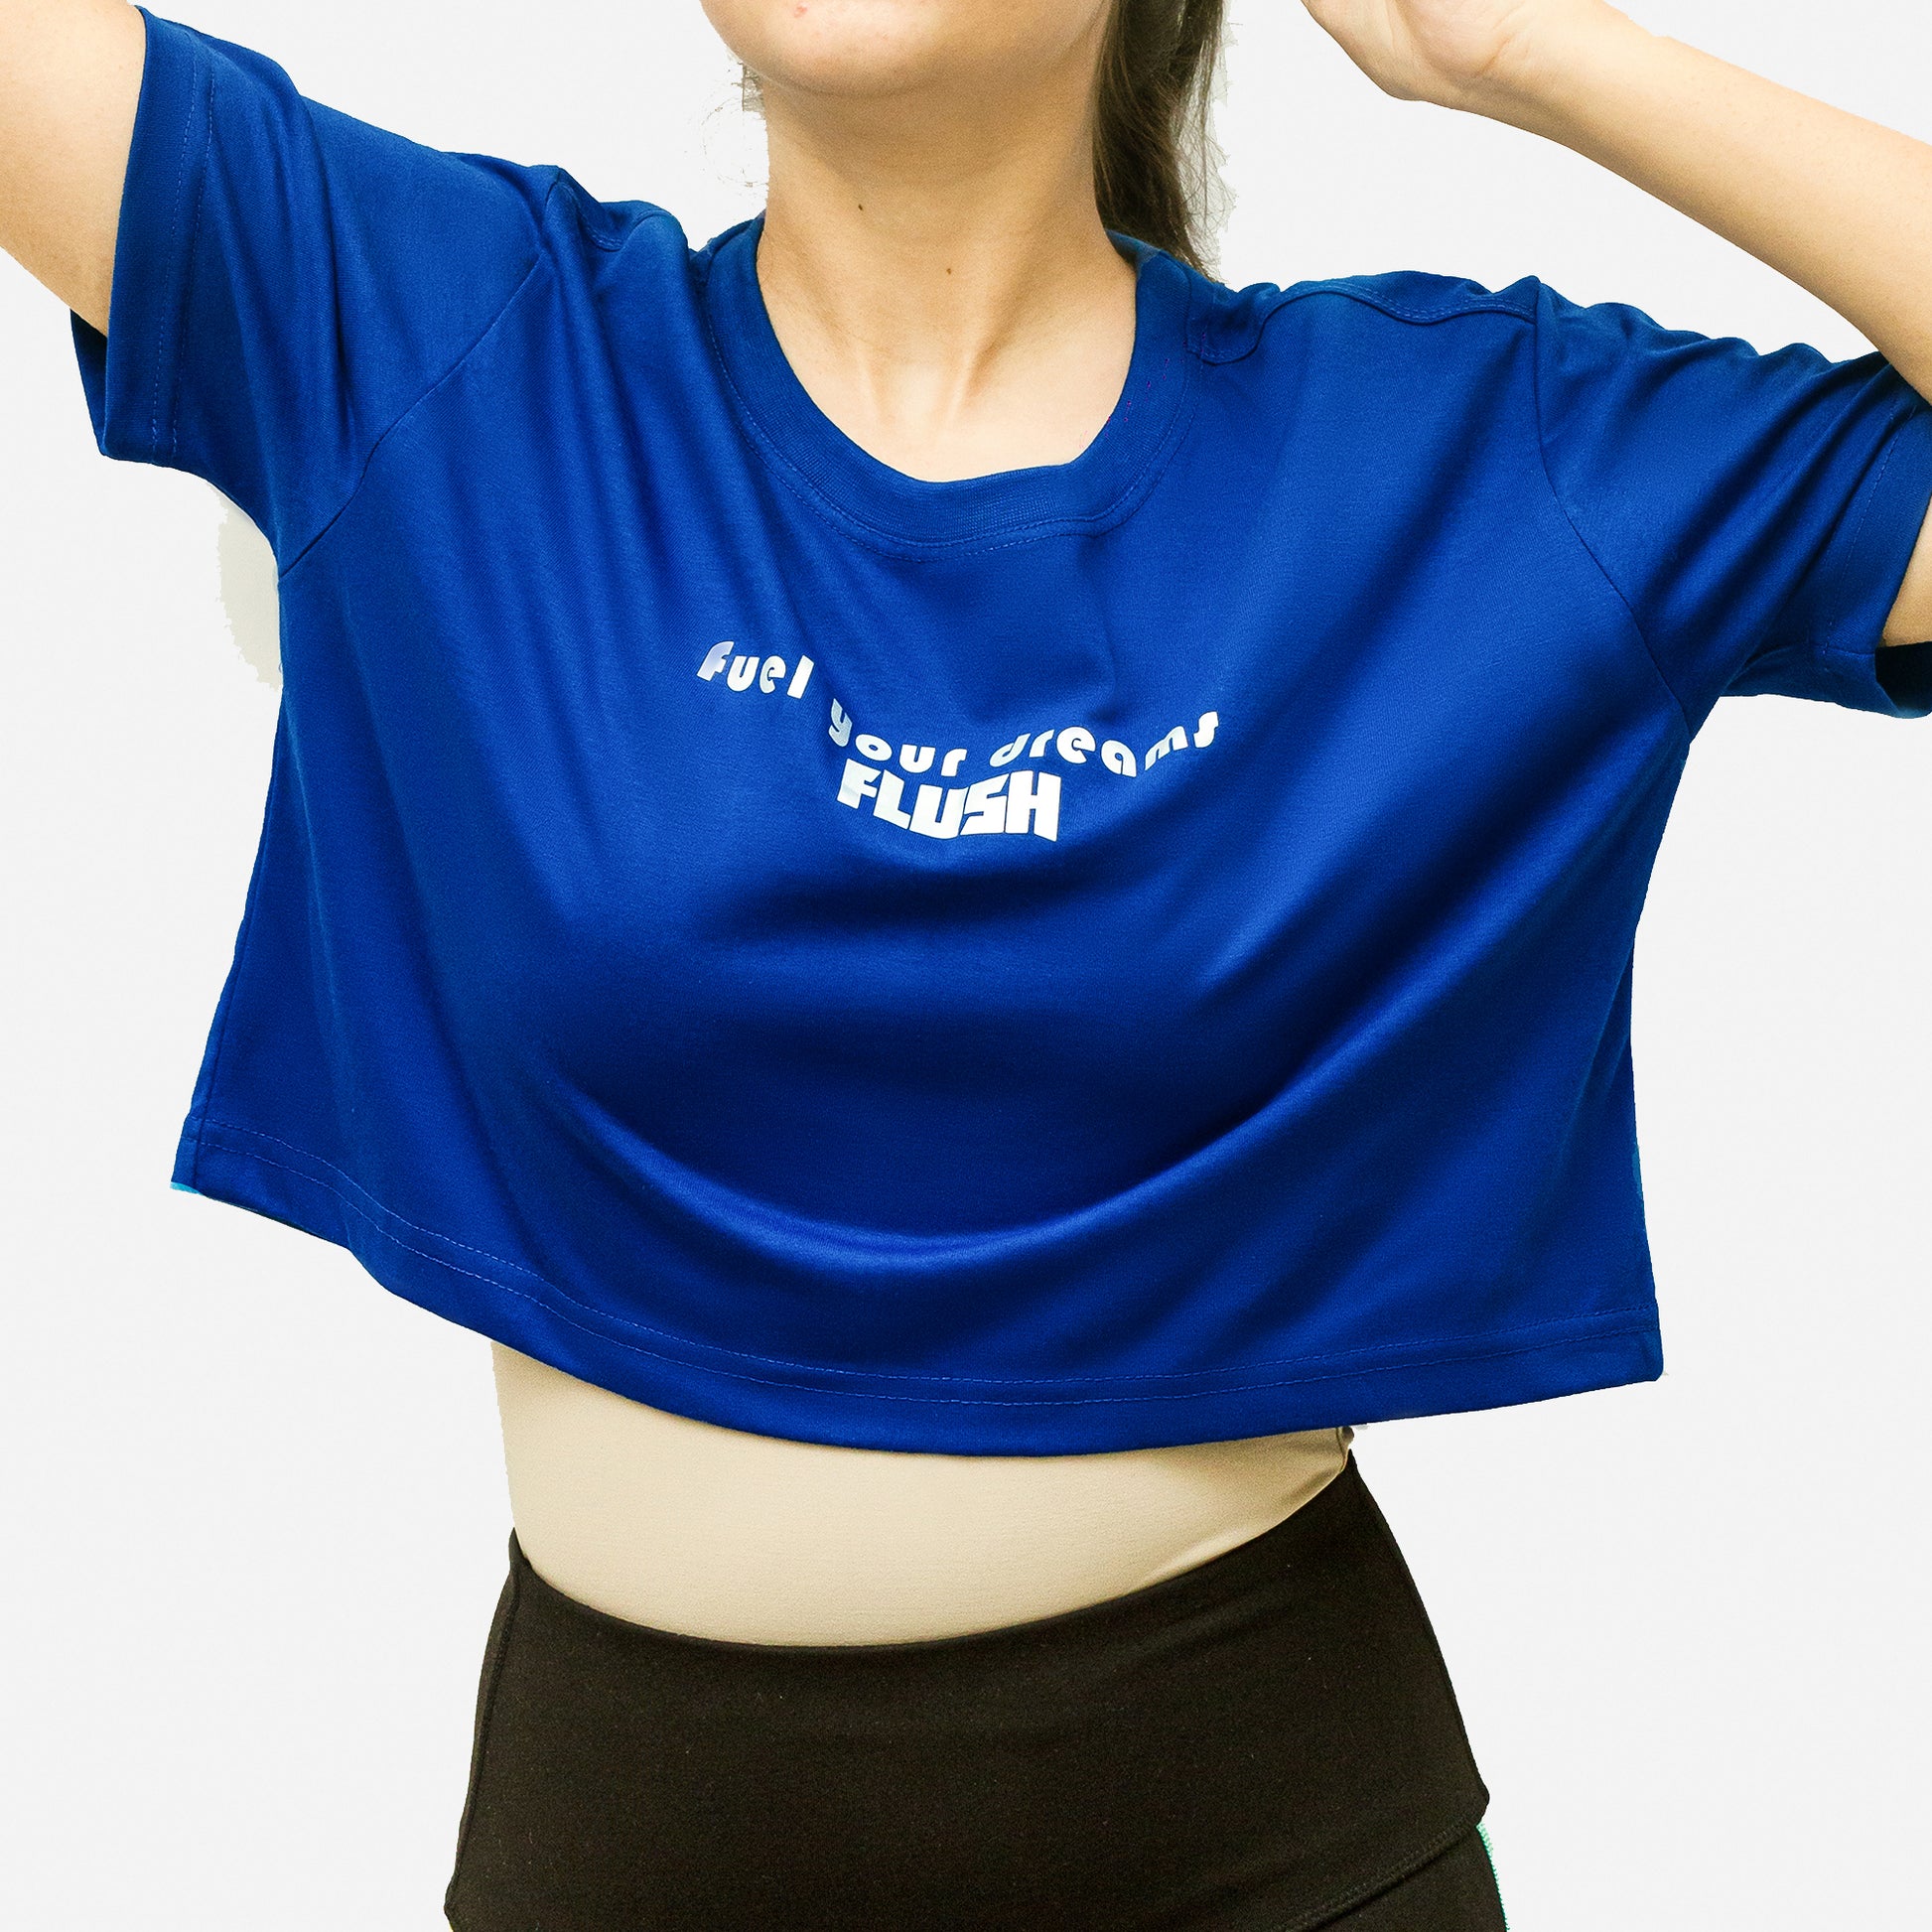 Buy Loose Fit Cotton Yoga Crop Top Shirts Women Online – Flush Fashion